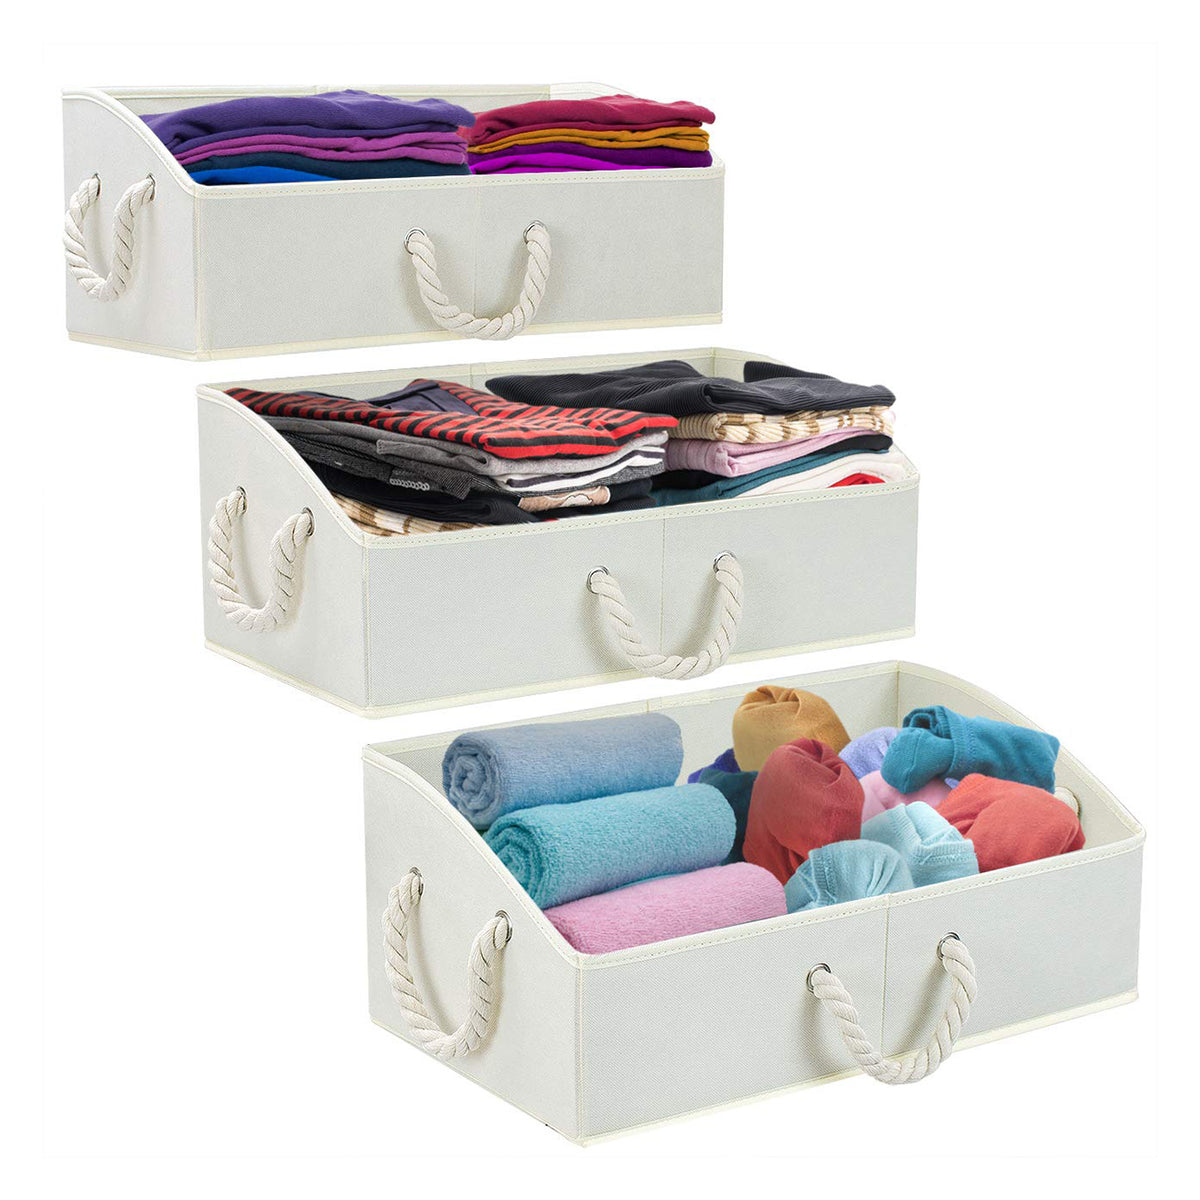 Homsorout Closet Basket, Trapezoid Storage Bins with Handles, 6